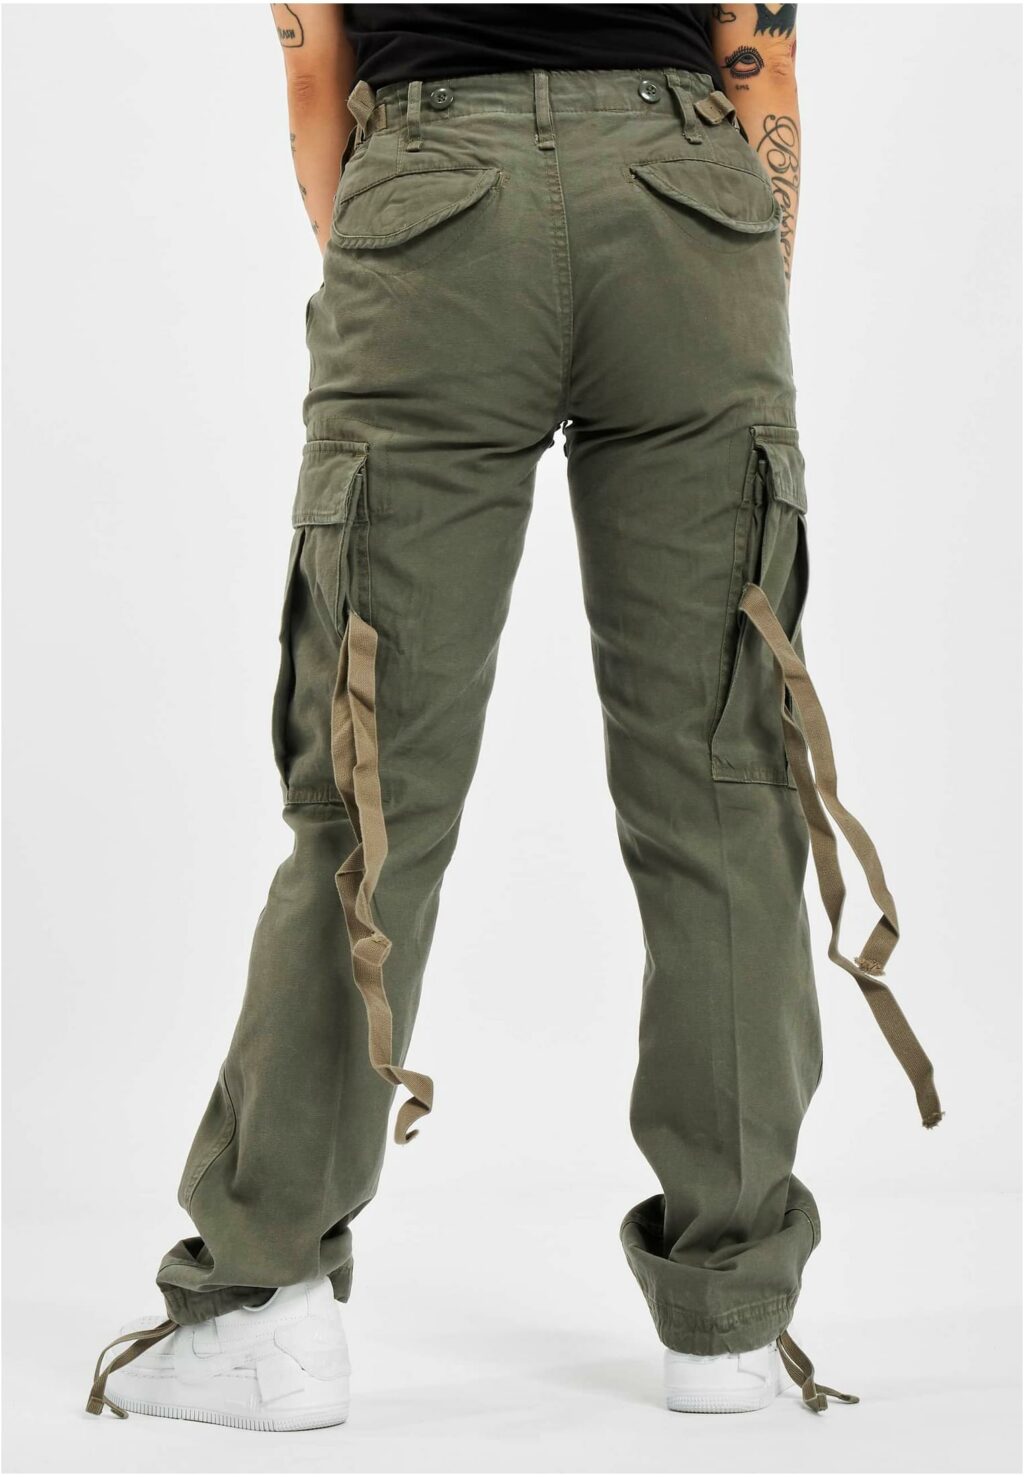 Brandit Ladies M-65 Cargo Pants olive BD11001